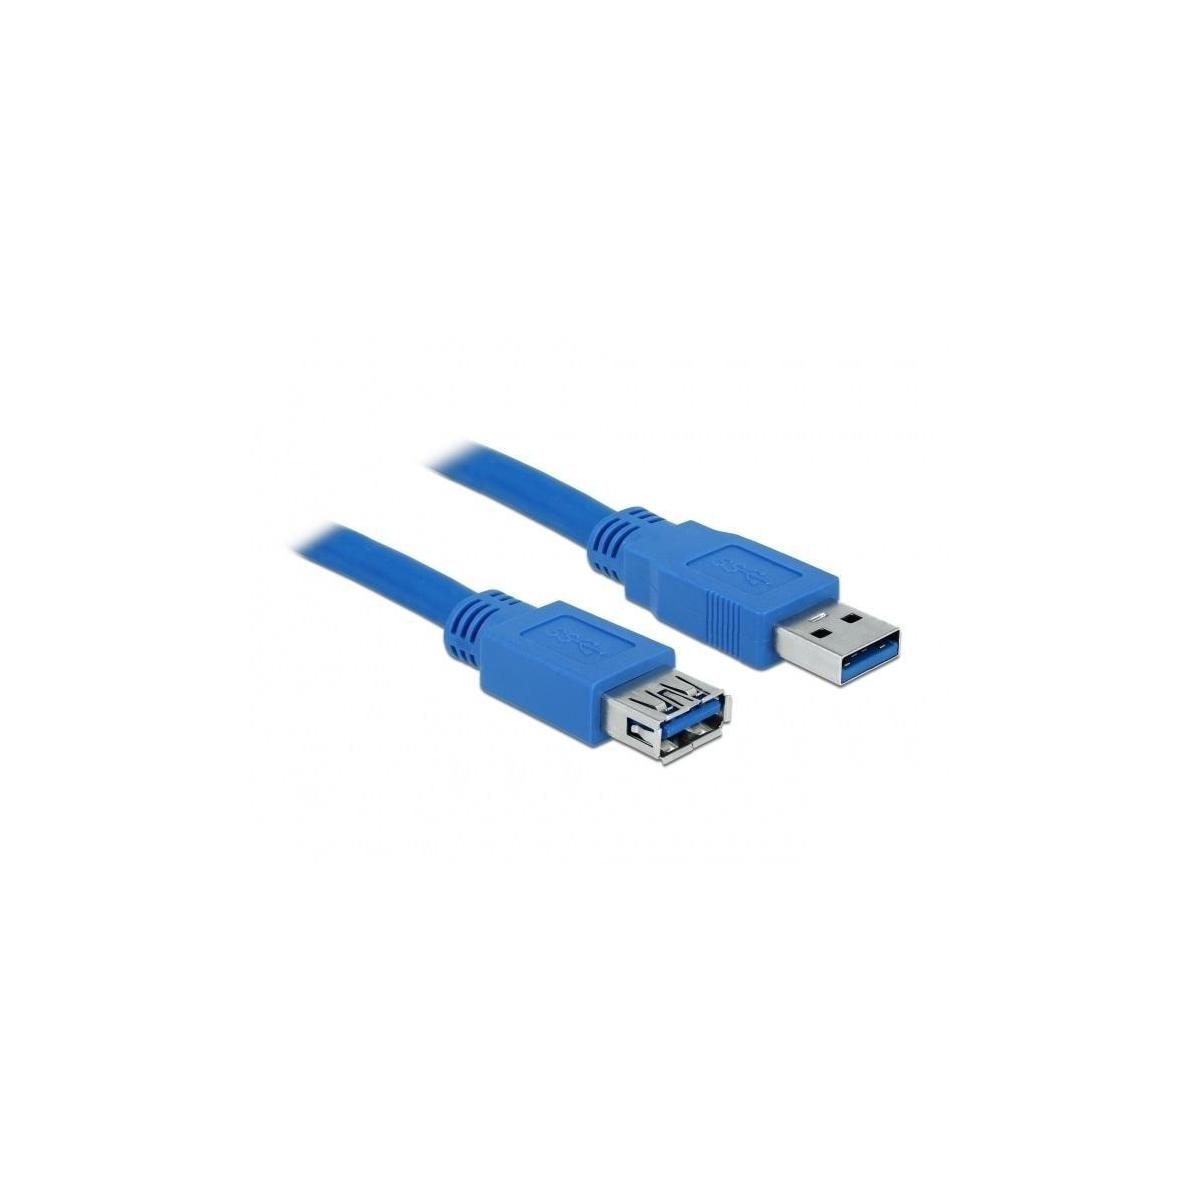 DELOCK DELOCK Kabel Peripheriegeräte A/A mehrfarbig Kabel, Verlaeng & USB 5mSt/B 3.0 Zubehör USB